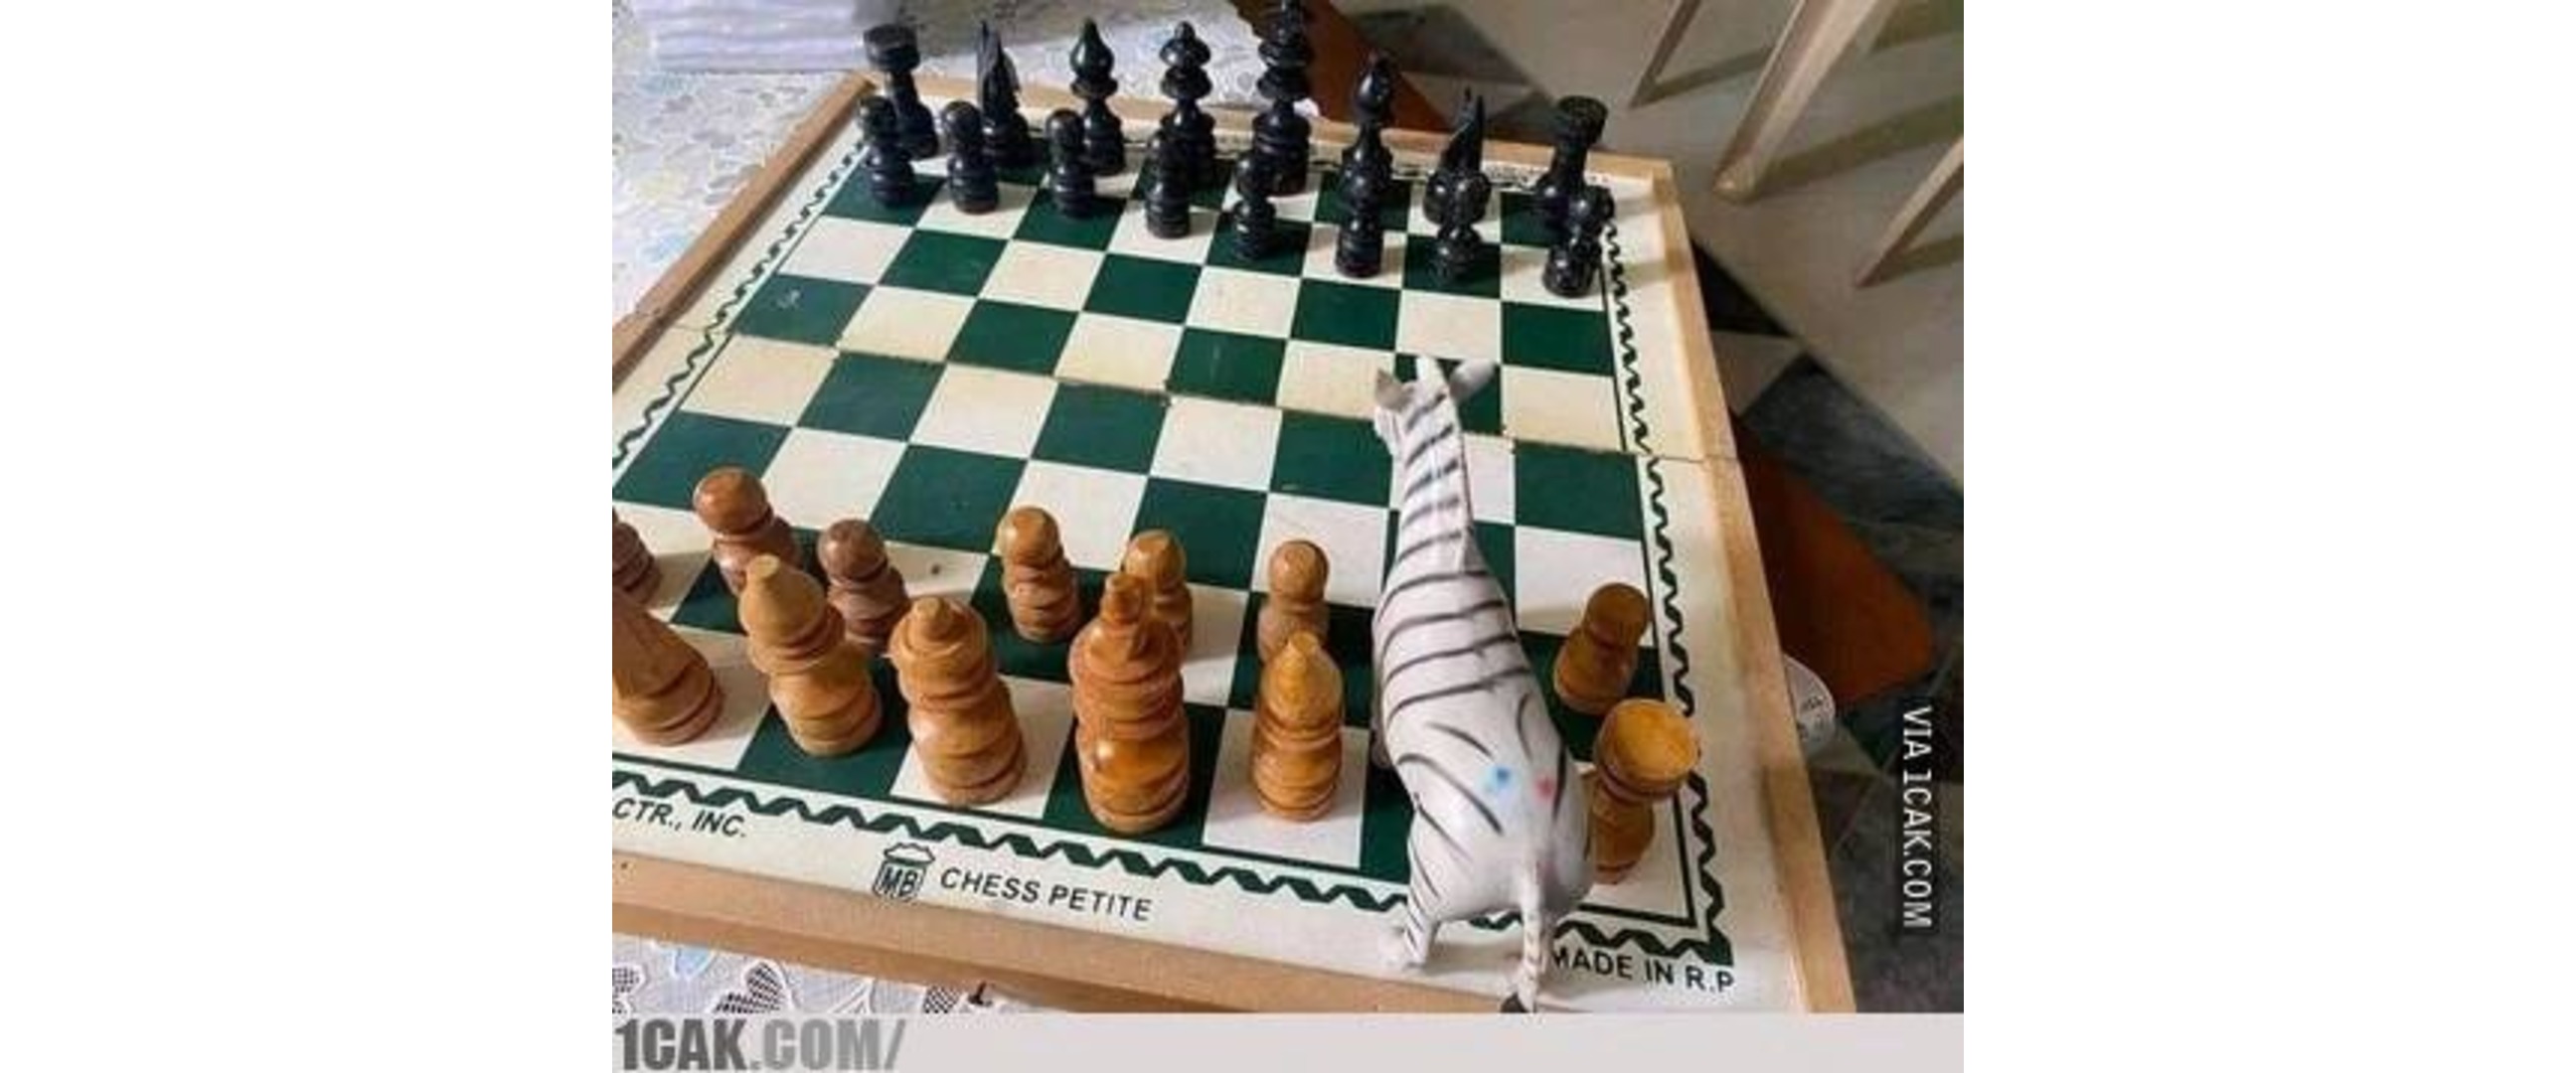 Nyeleneh parah, 11 potret kocak orang main catur ini bikin sang master gagal paham